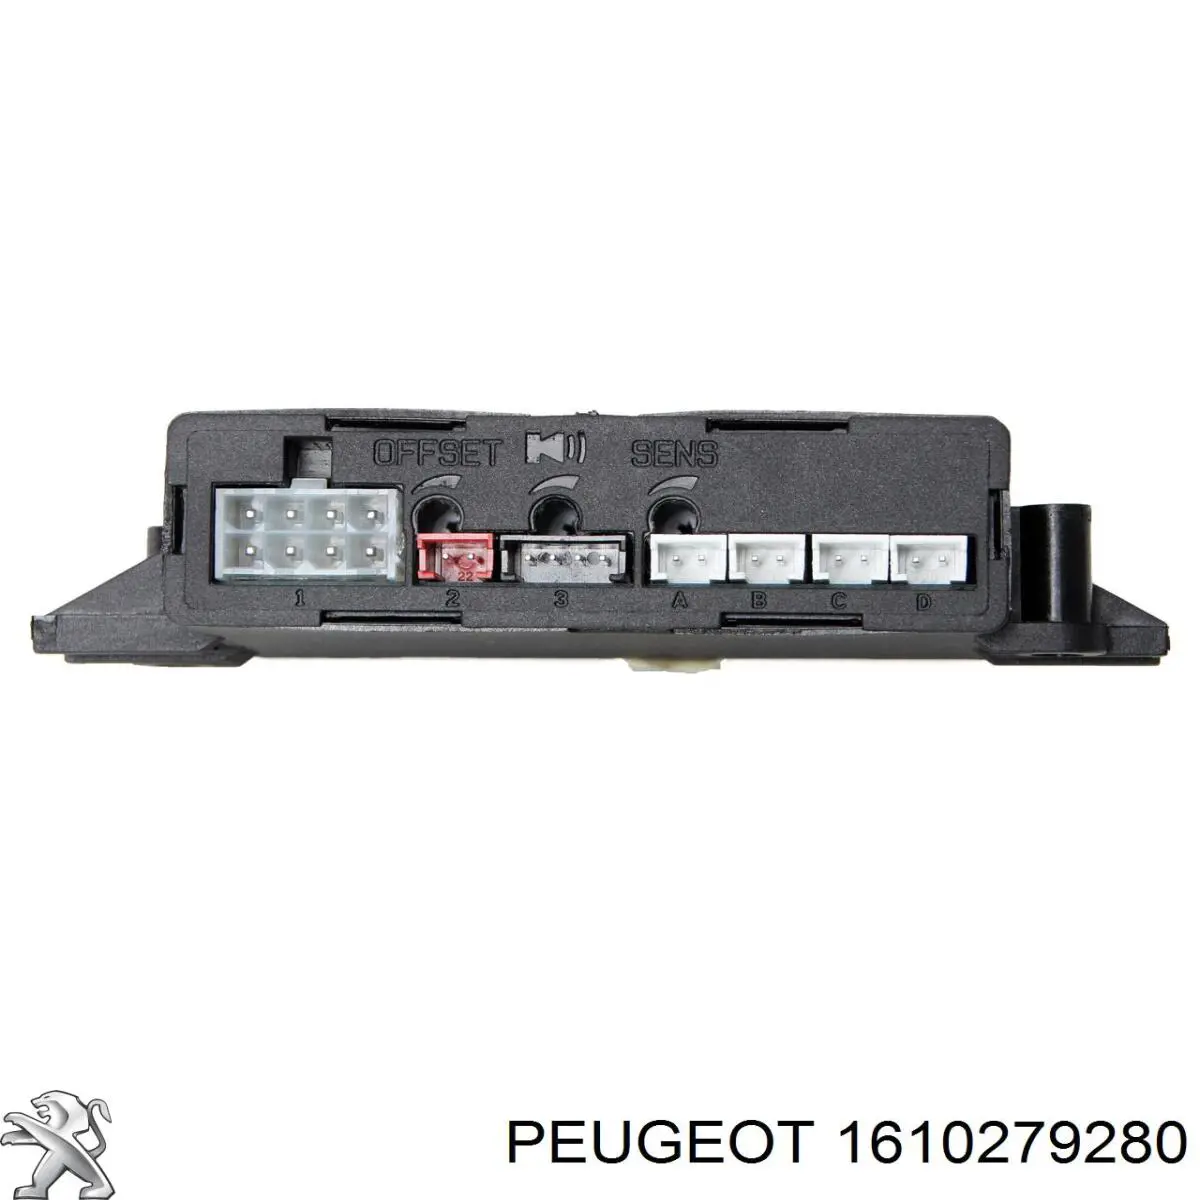 1610279280 Peugeot/Citroen kit de instalacion parktronic